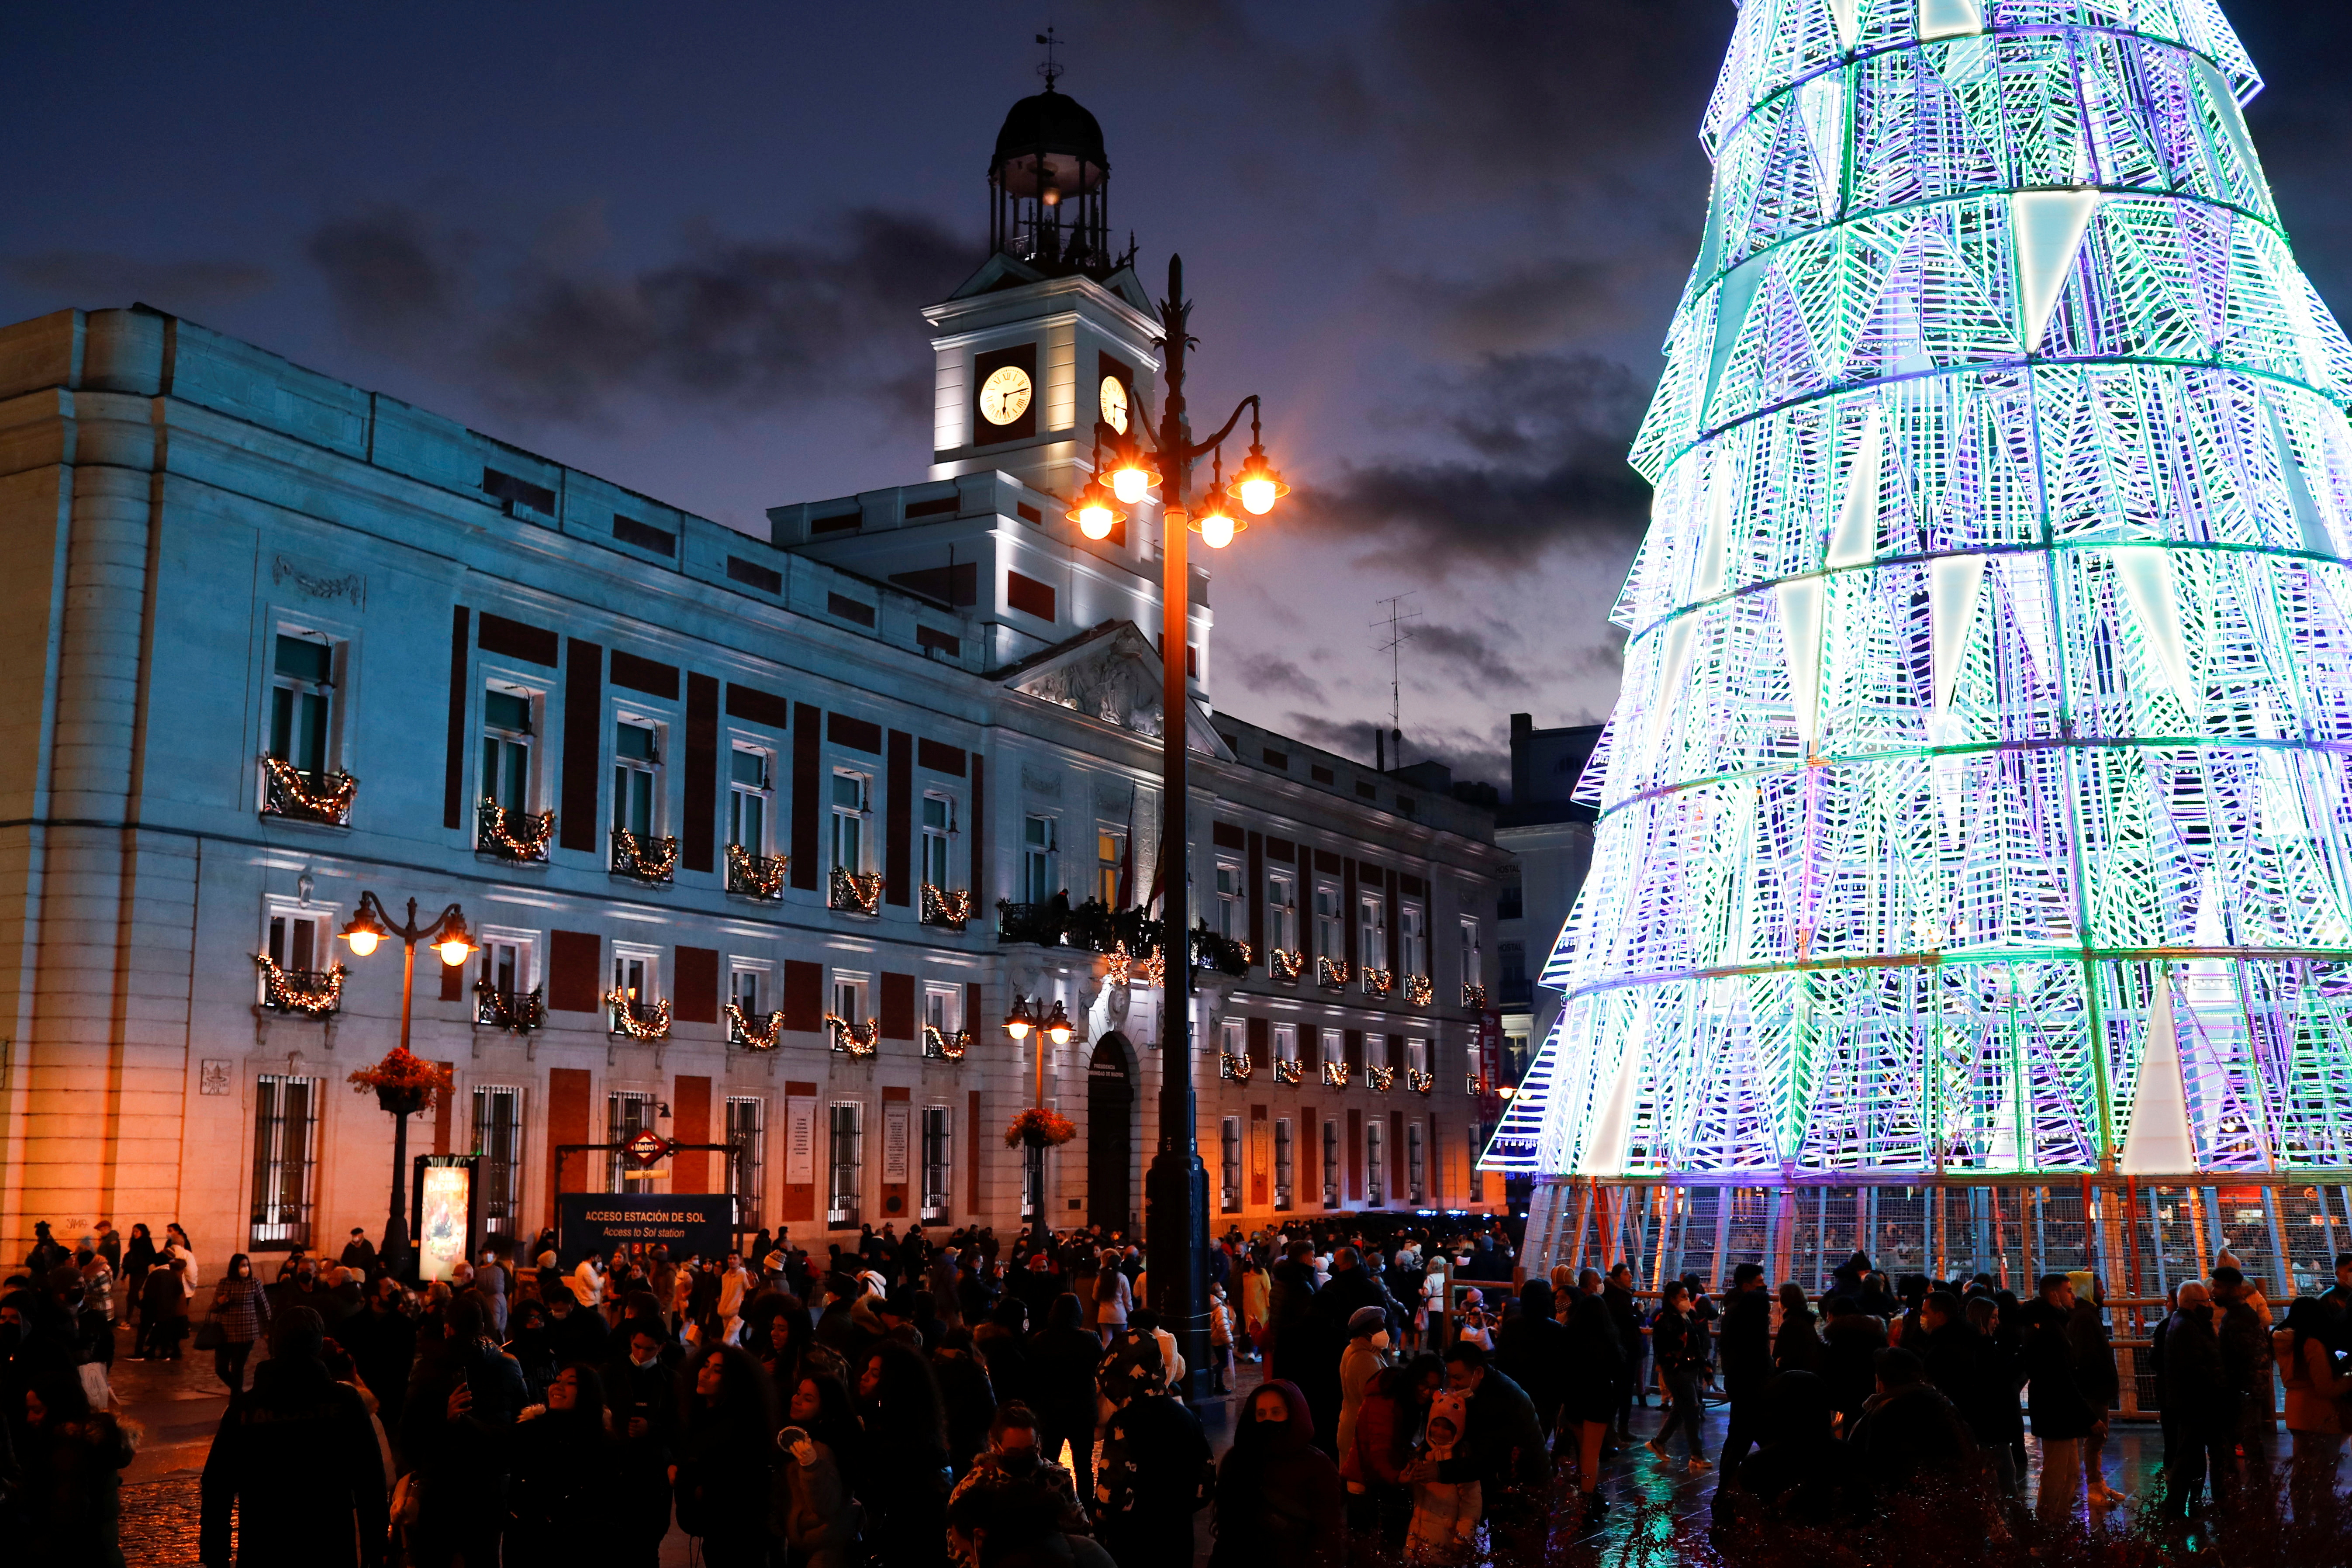 Una imagen navideña de la Puerta del Sol, en Madrid (REUTERS/Susana Vera)